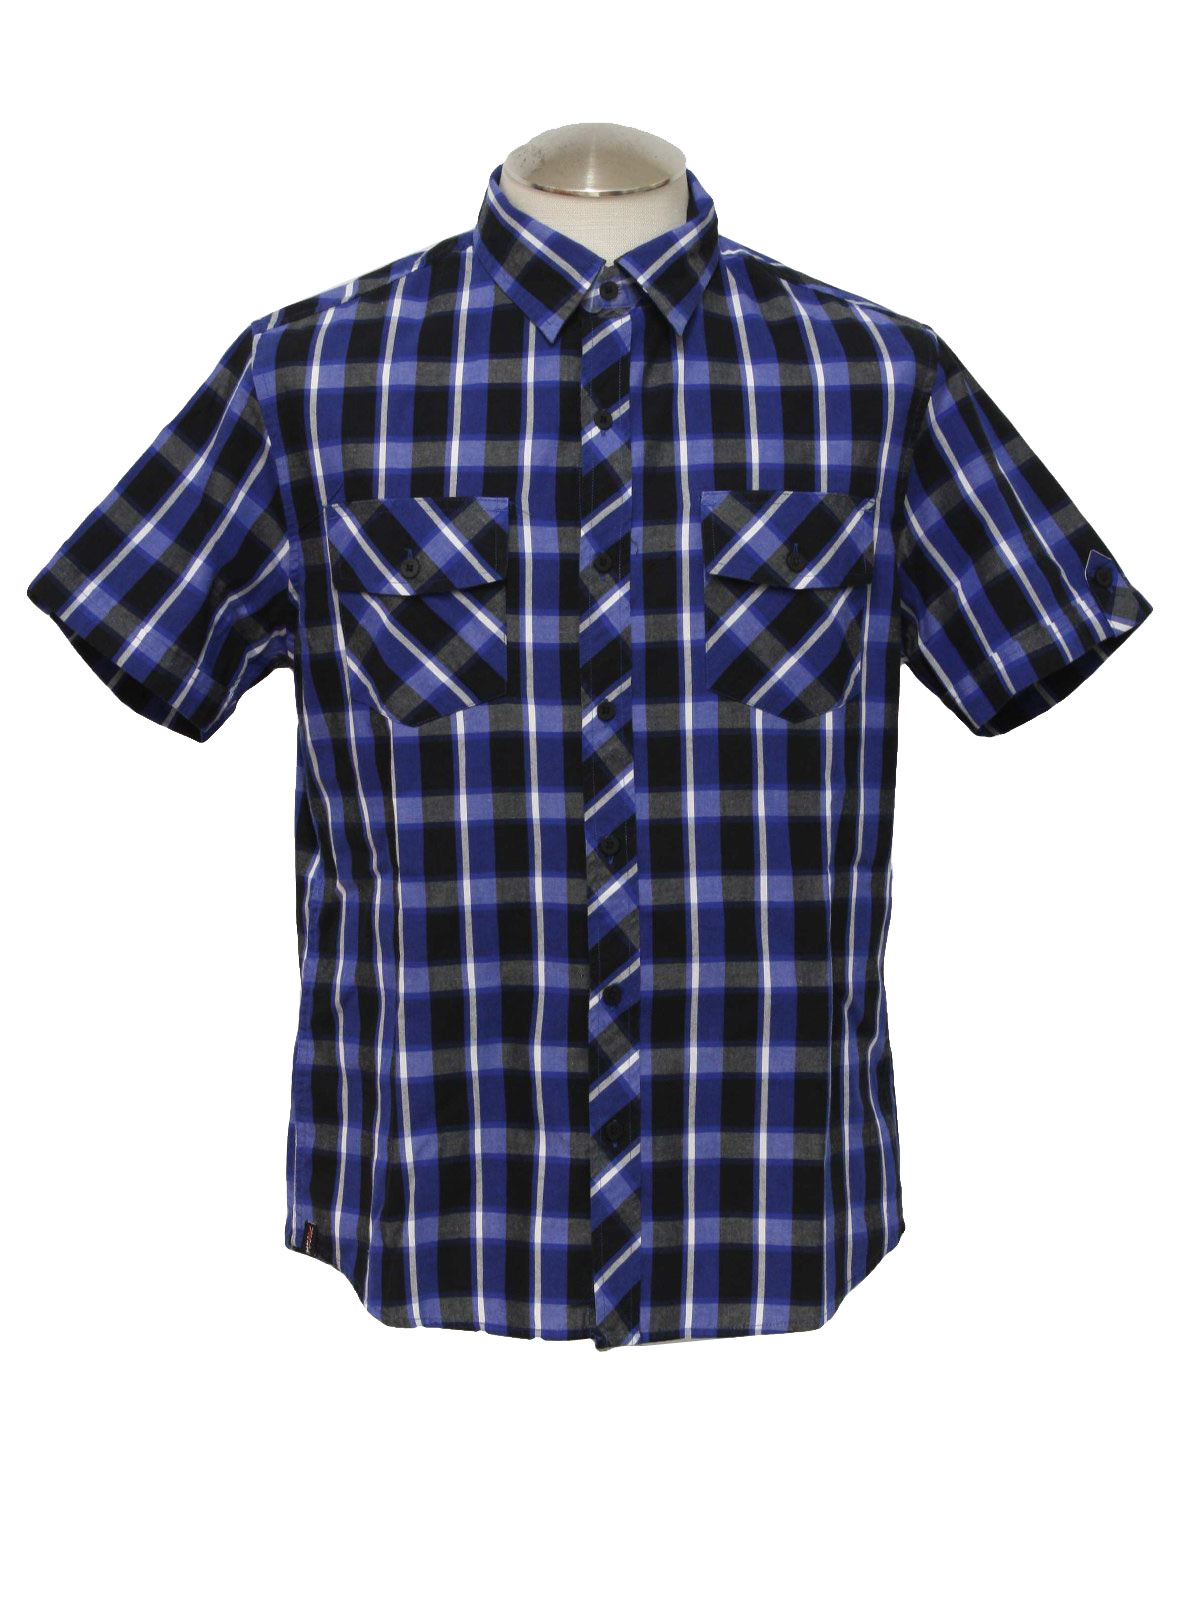 Retro Nineties Shirt: 90s -Hawk- Mens cobalt blue, black, white ...